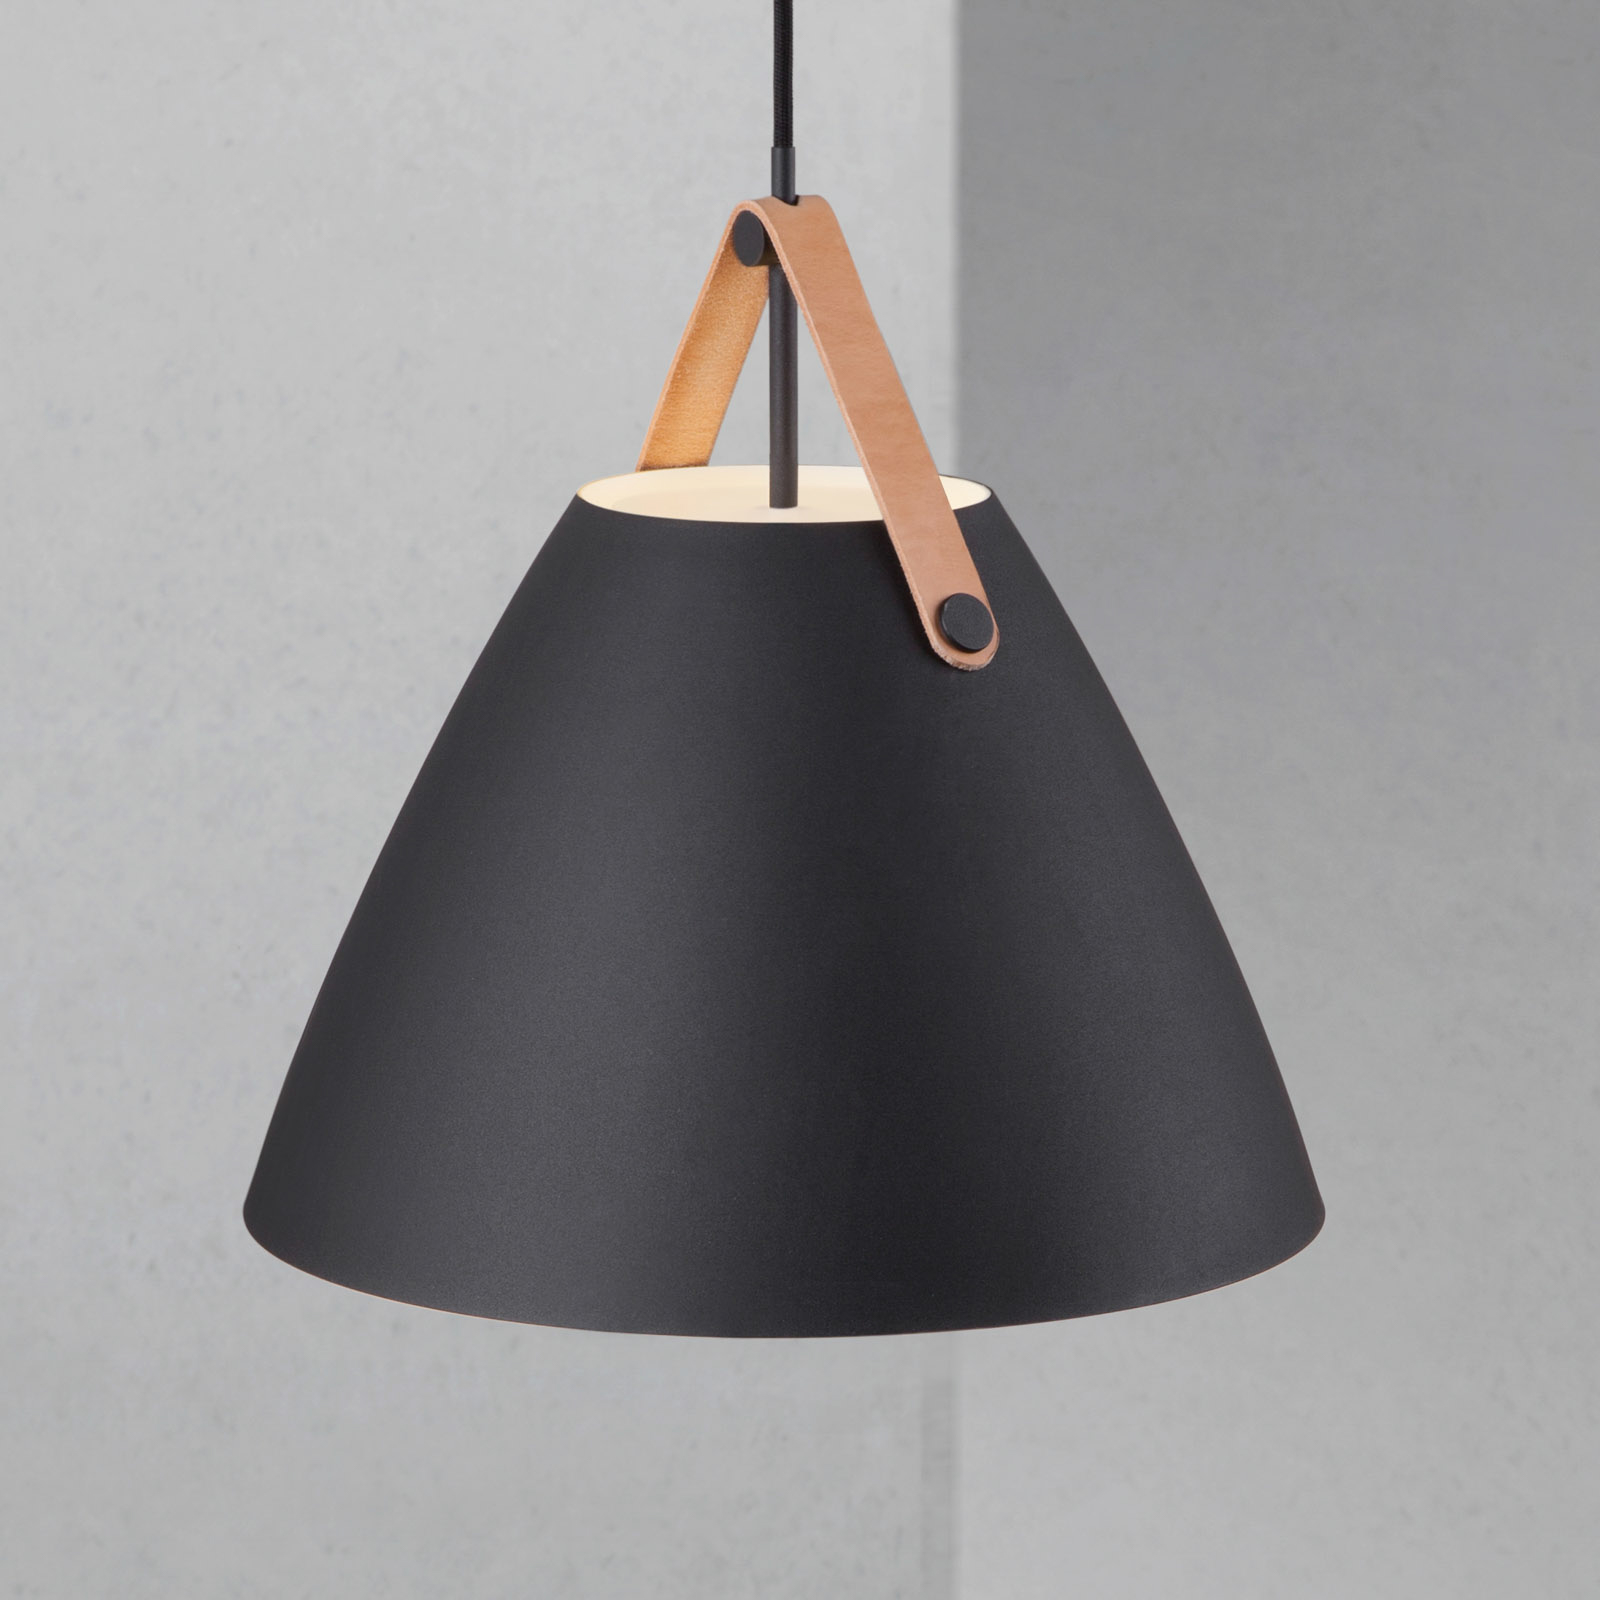 LED hanglamp incl. leren ophanging | Lampen24.nl